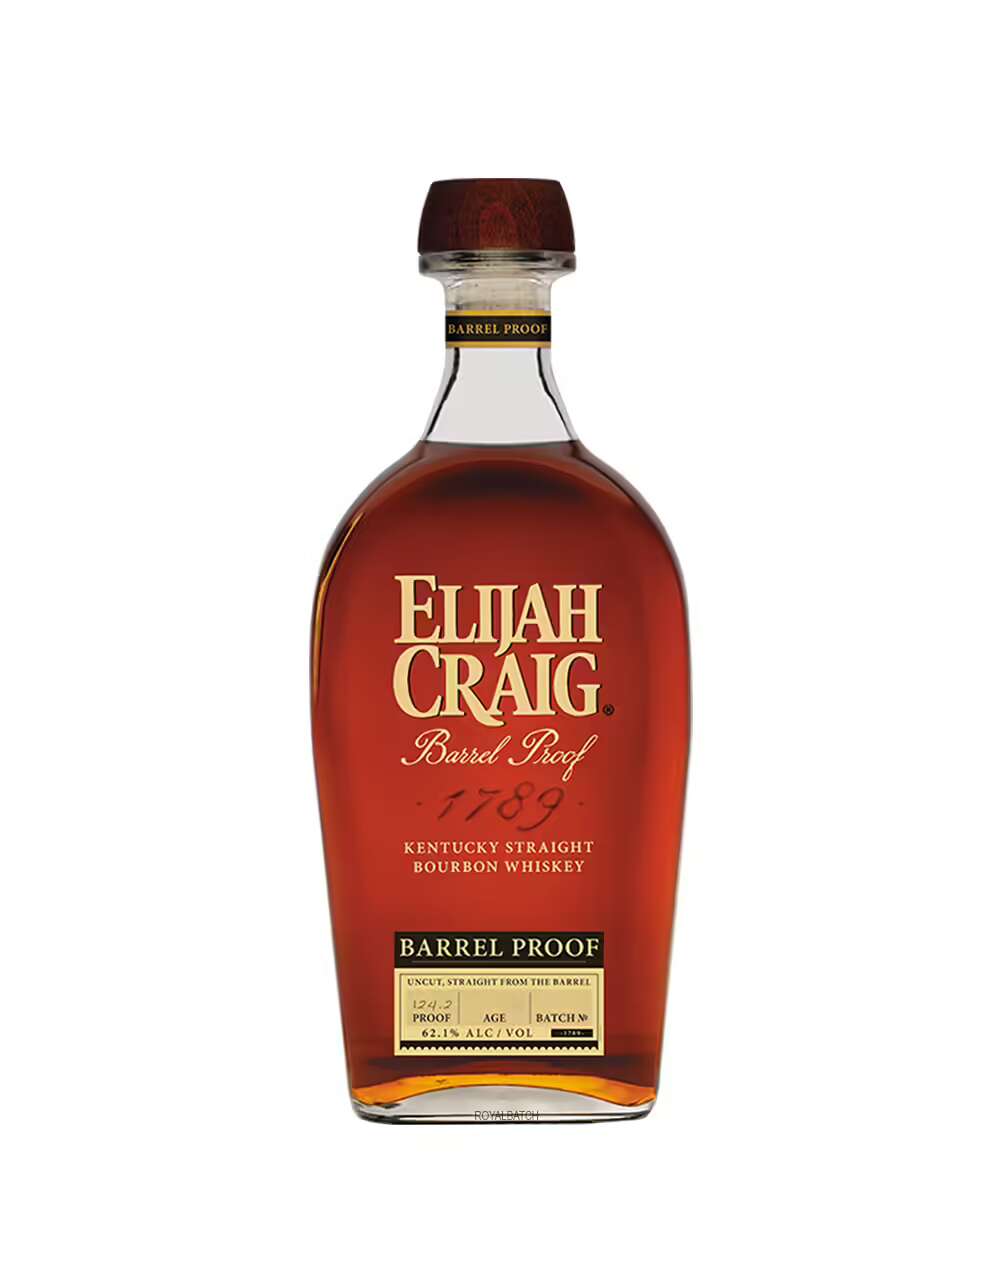 Elijah Craig Barrel Proof (Batch B523) 12 Year Old Bourbon Whiskey